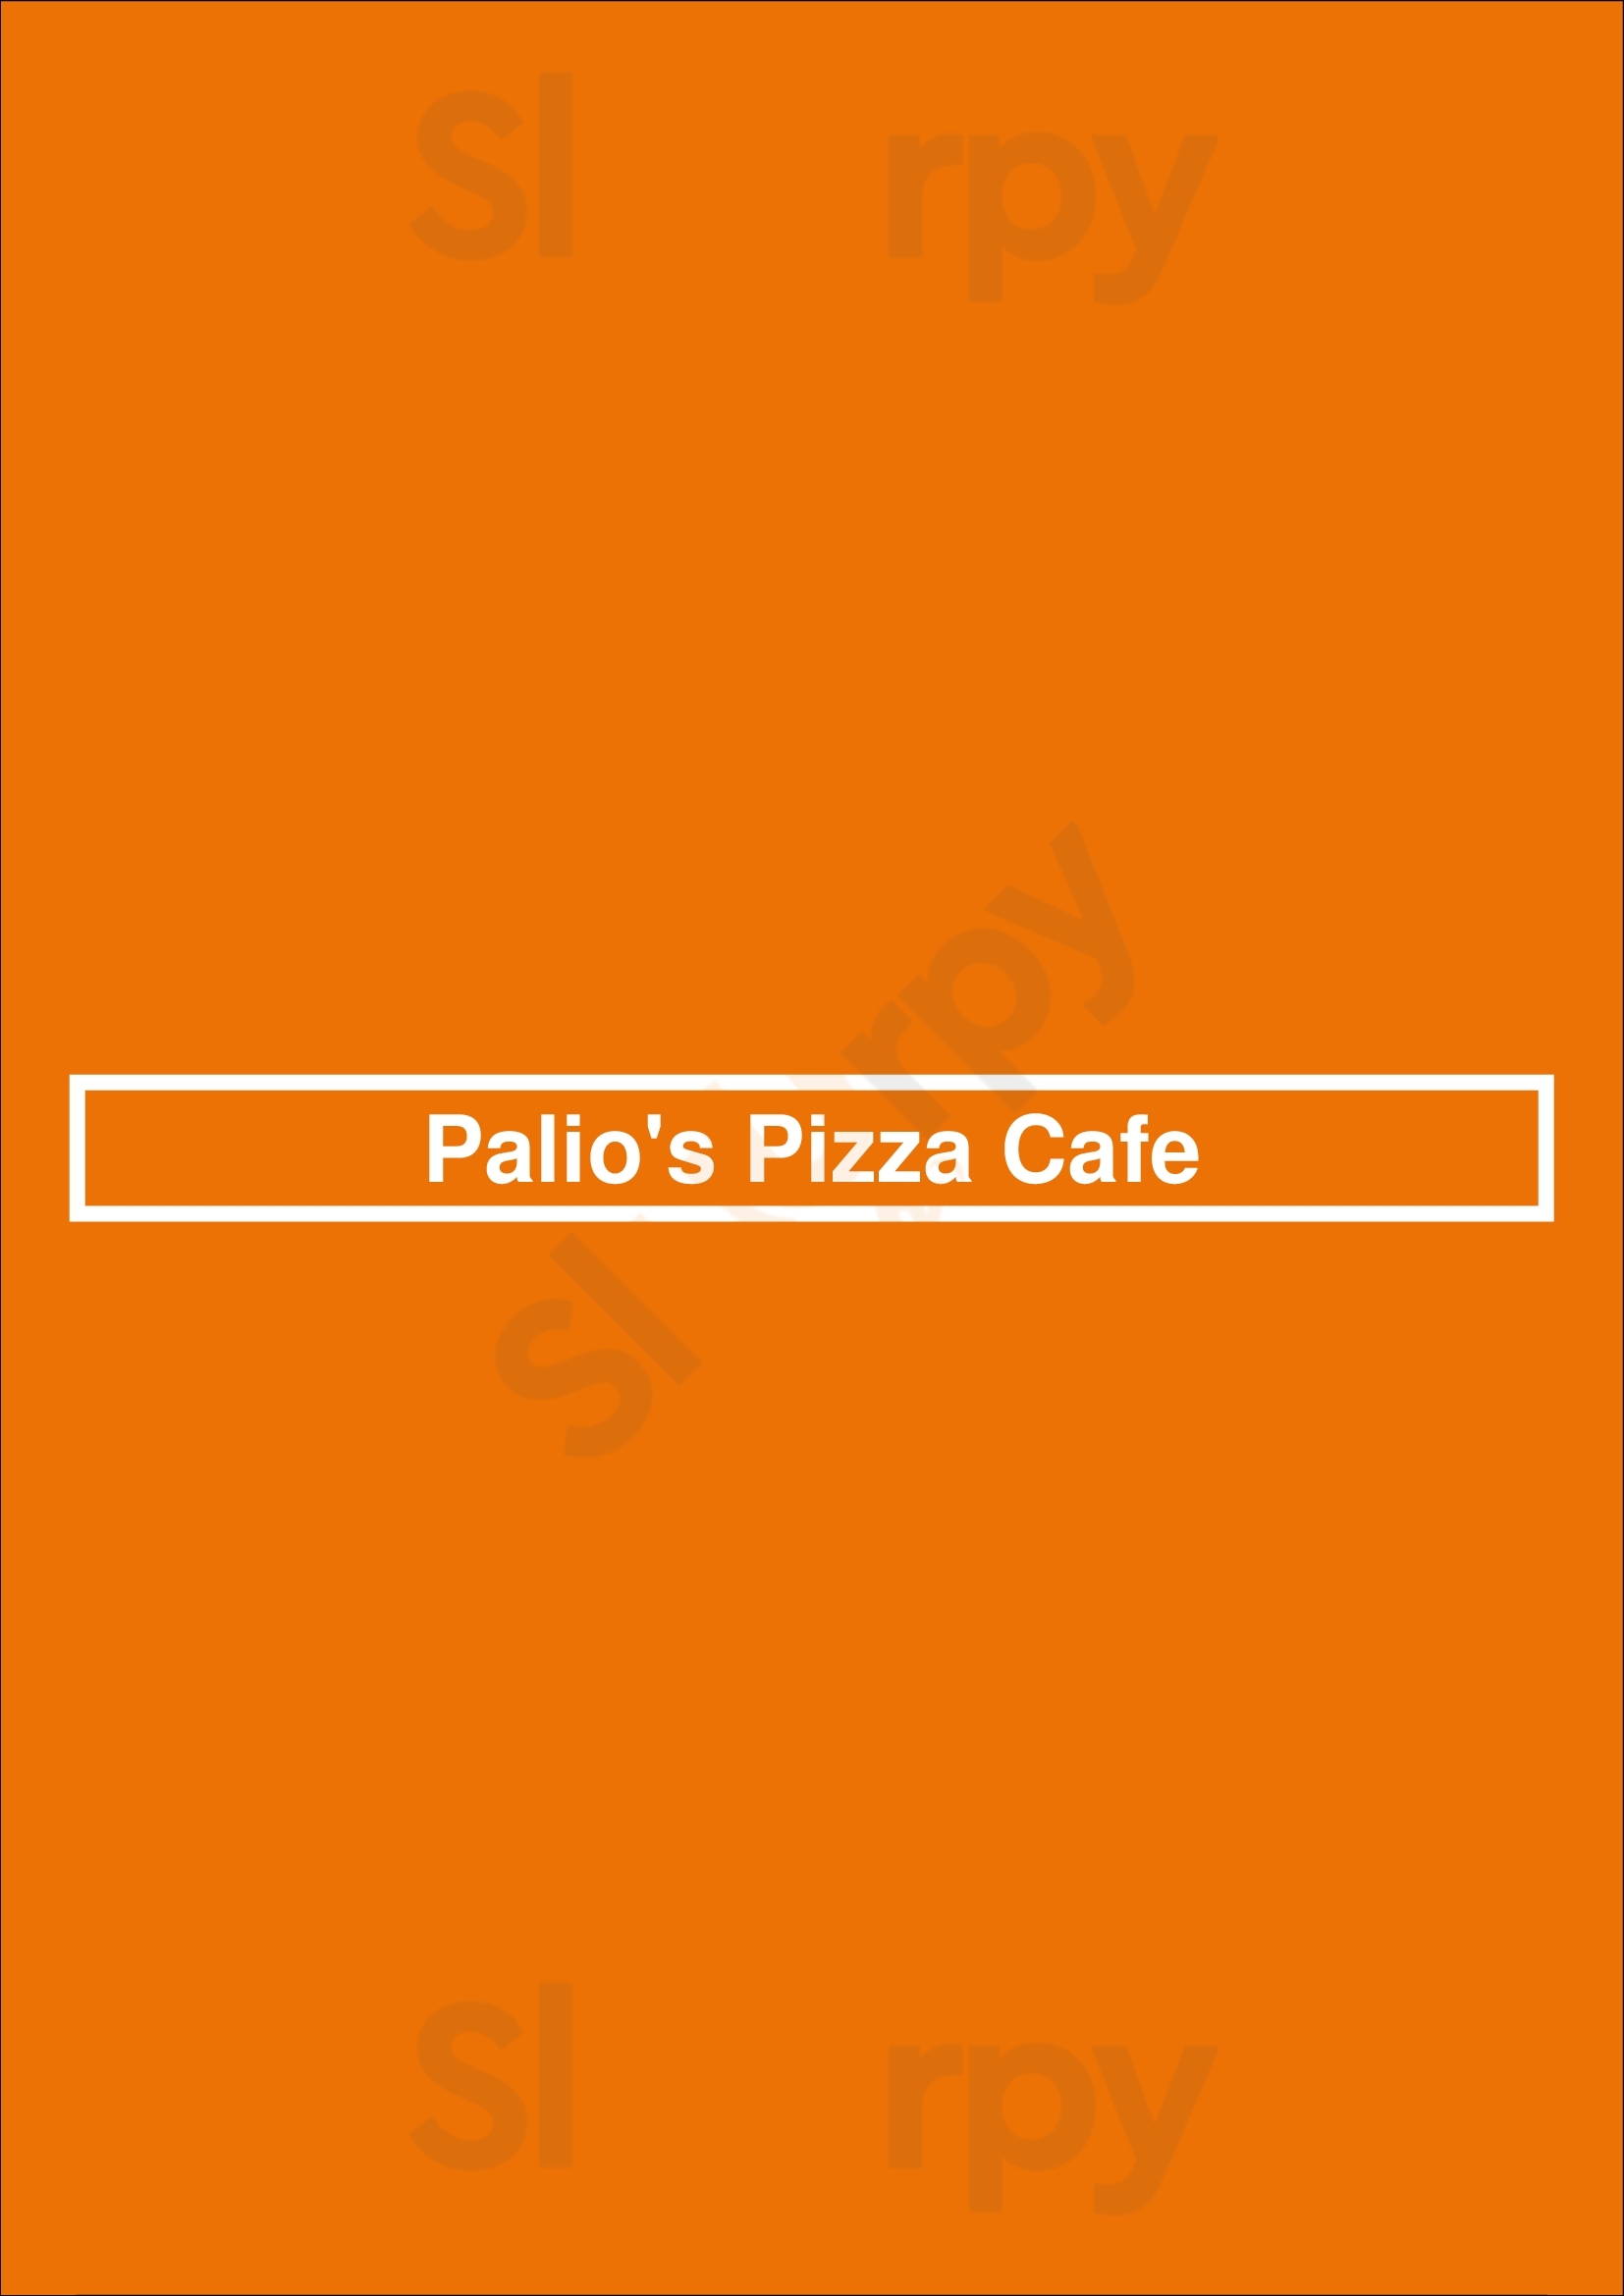 Palio's Pizza Cafe Plano Menu - 1